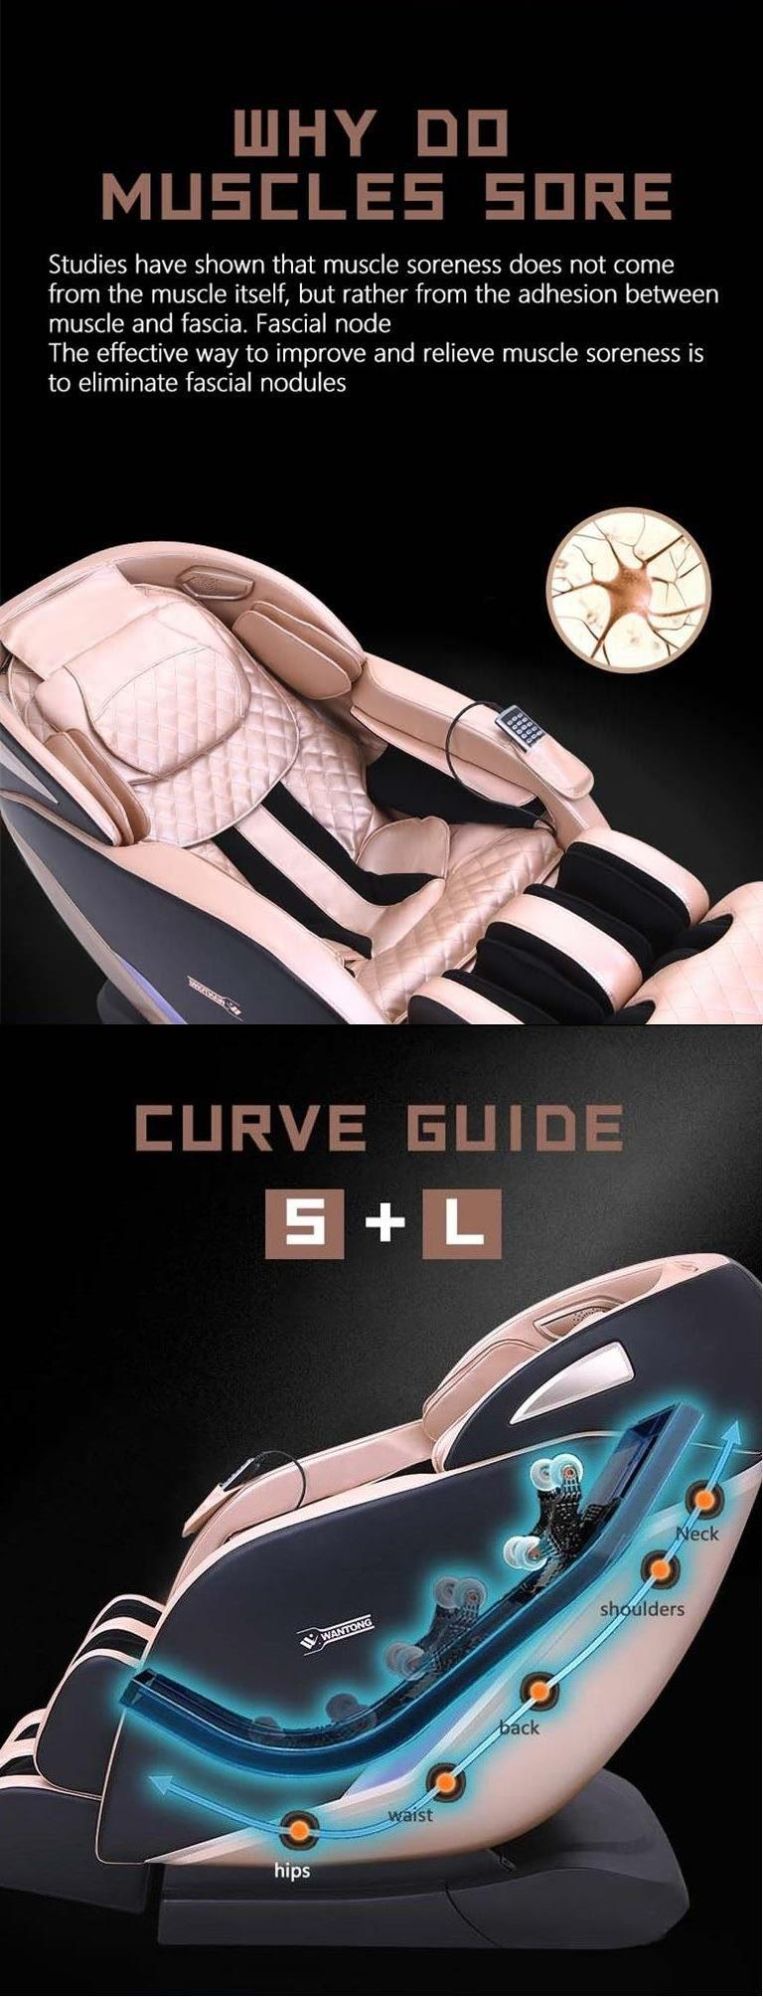 Home Luxury Full Body Electric Ai Smart Heat Recliner Thai Stretch 3D Robot Hand SL Track Zero Gravity Shiatsu 4D Massage Chair